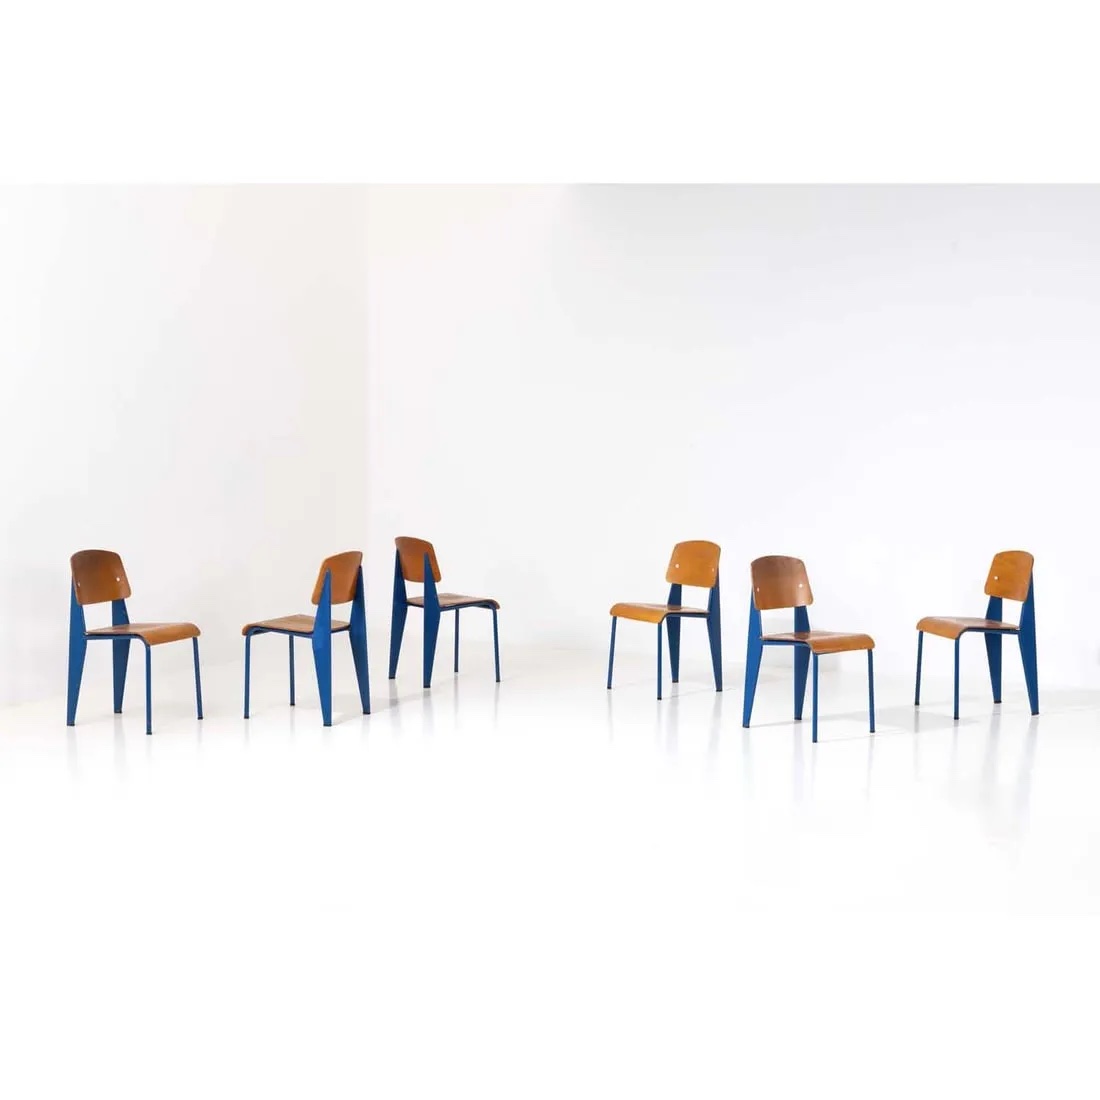 Jean Prouvé, set of six ‘Métropole’ chairs, no. 305, estimated at €80,000-€120,000 ($87,090-$130,635) at Piasa.